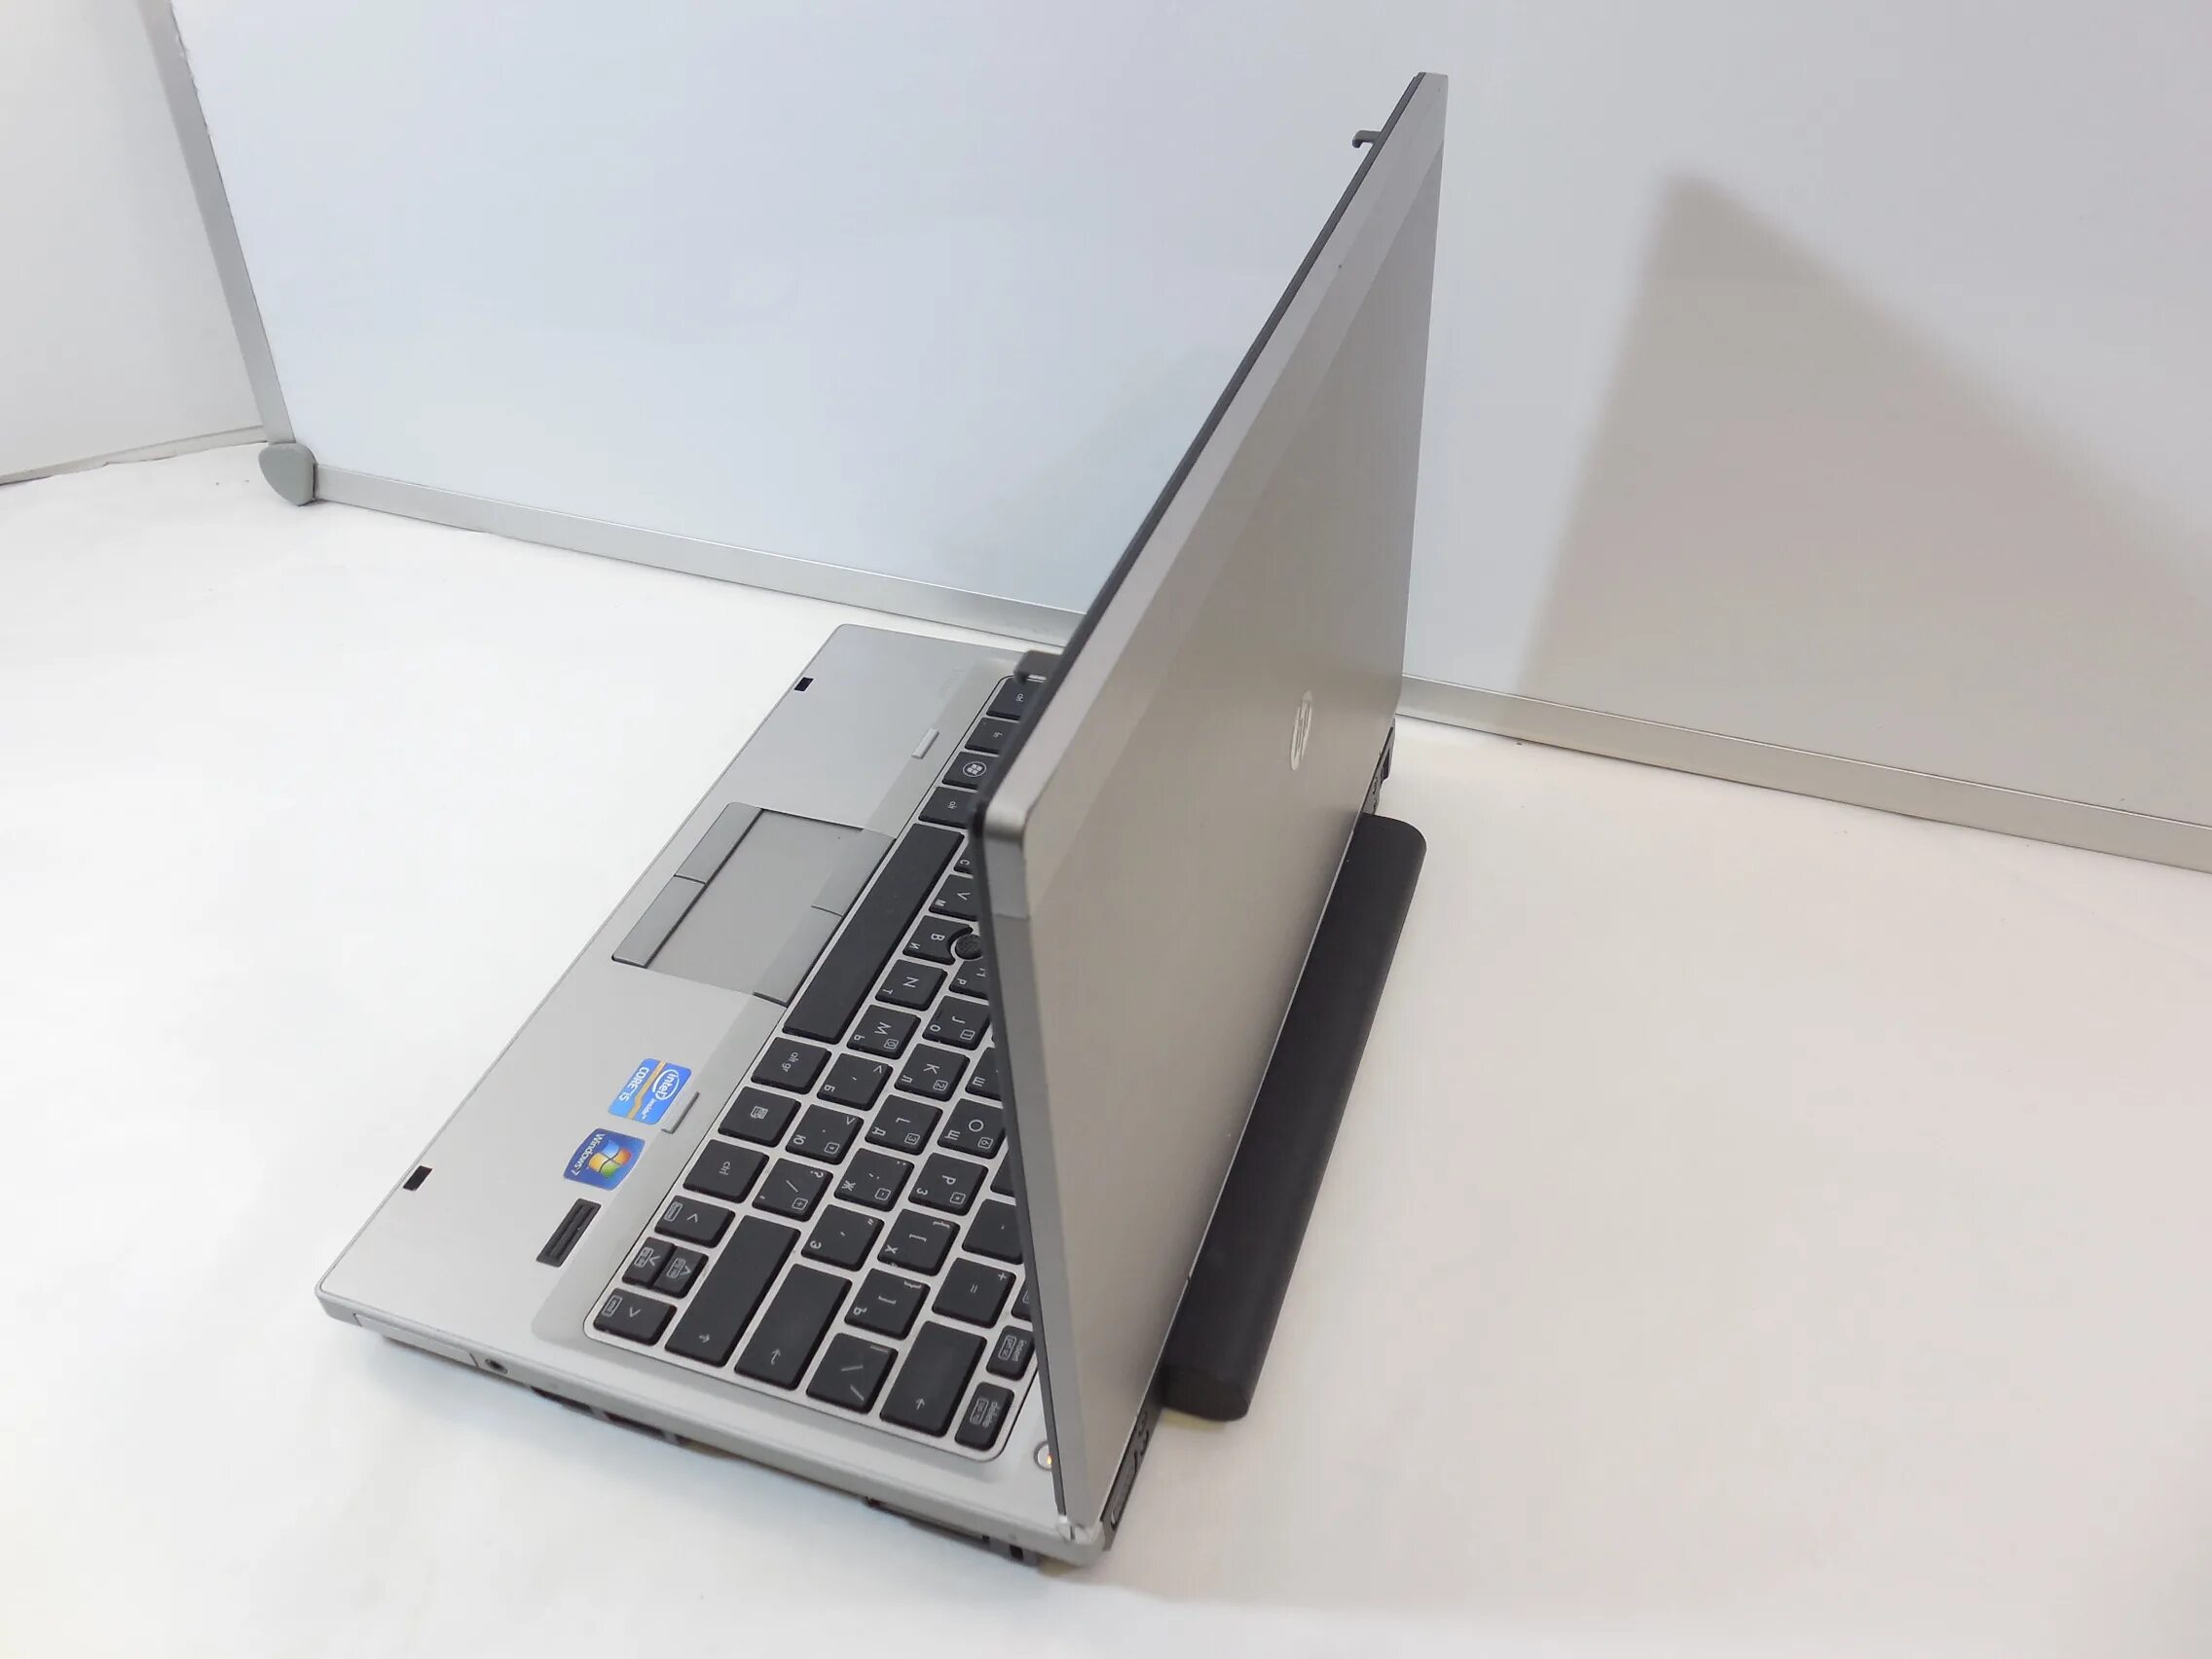 Ноутбук в металлическом корпусе. Блютуз ELITEBOOK 2560p.